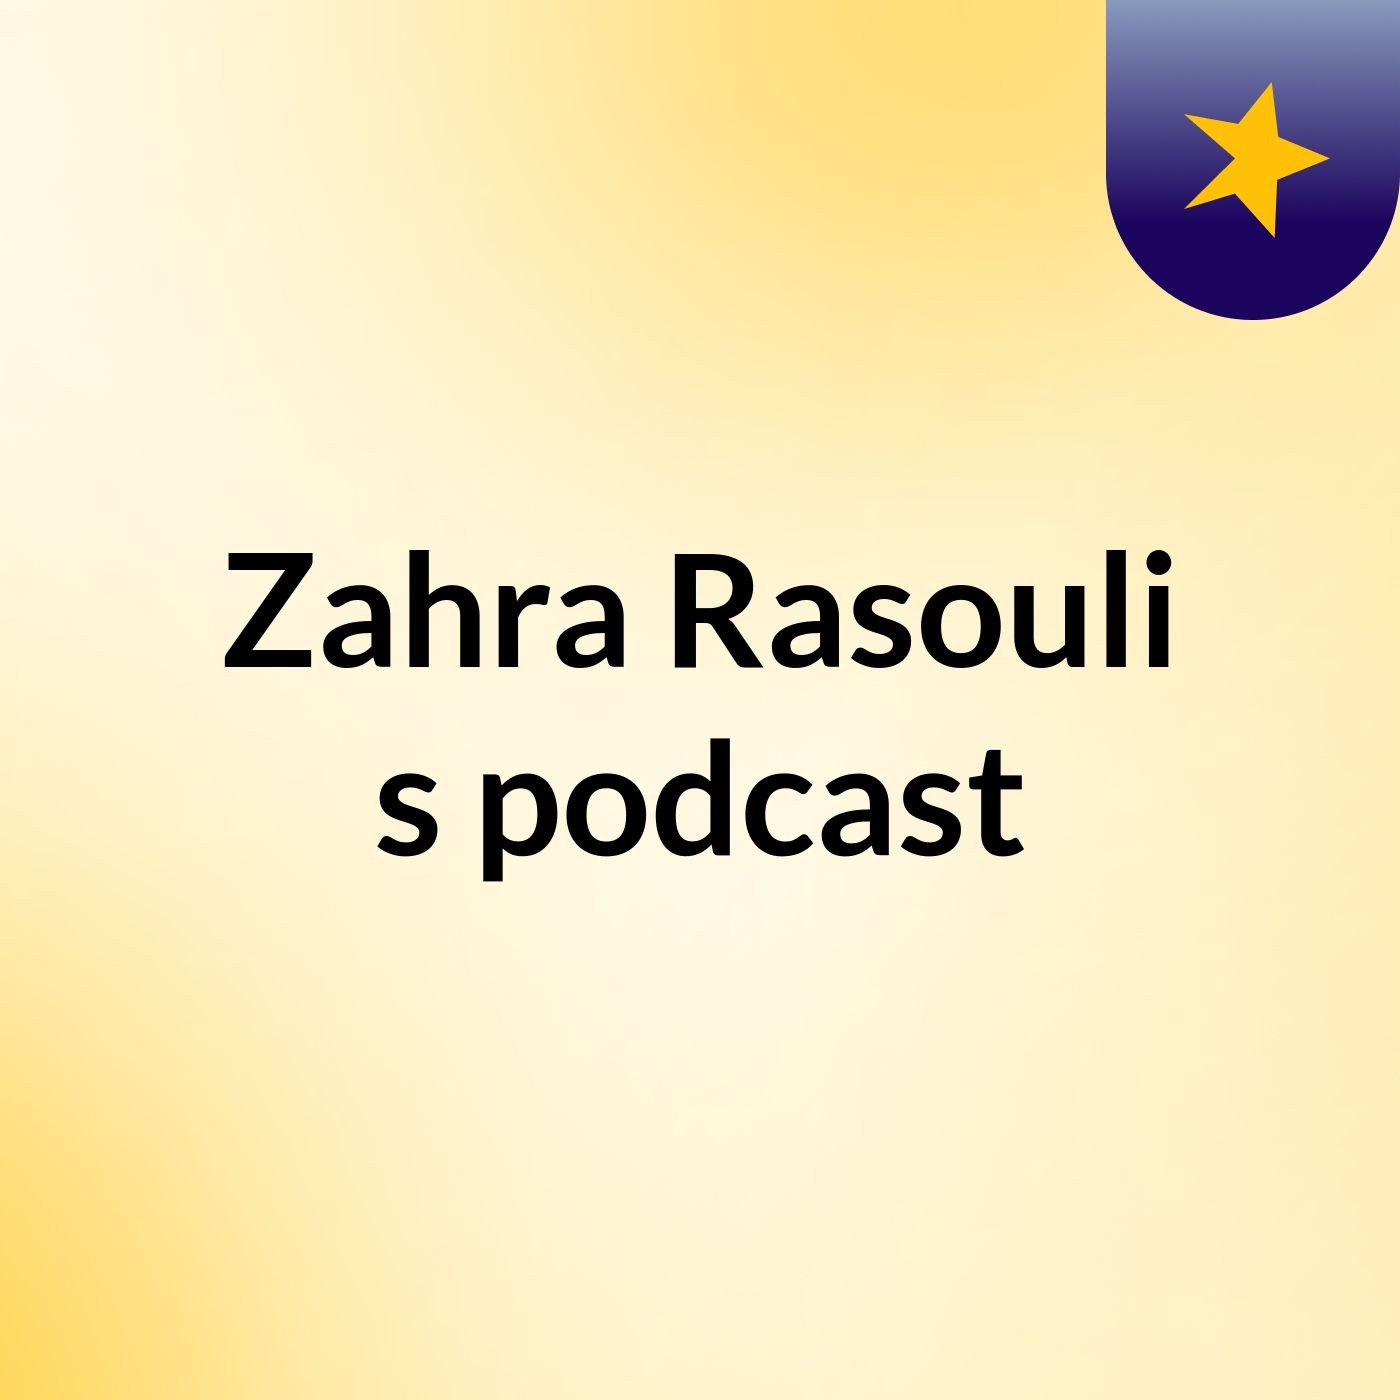 Zahra Rasouli's podcast